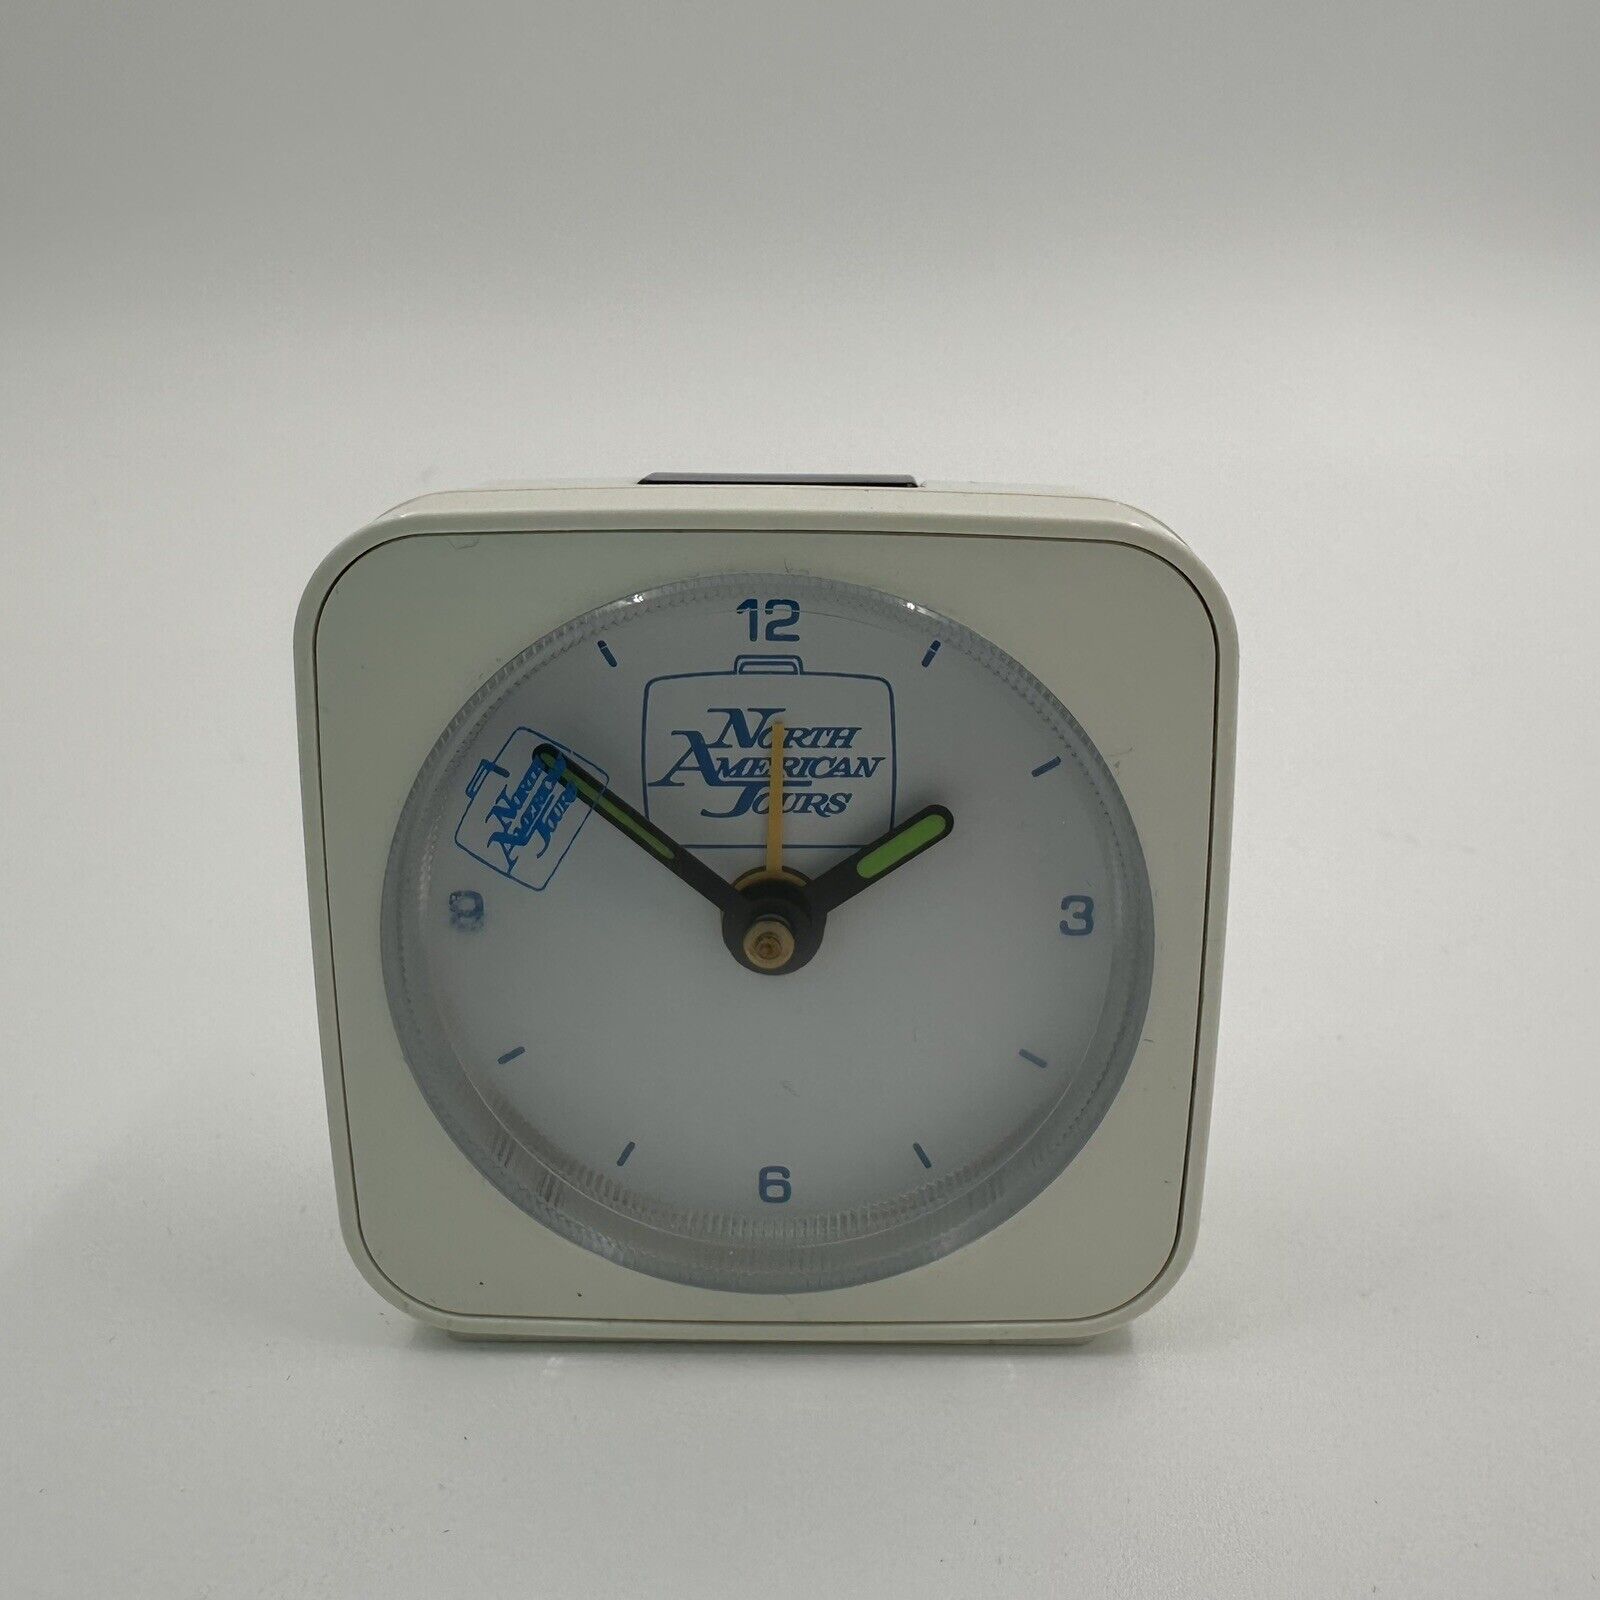 Vintage North American Tours Travel Alarm Clock w/ Logo Secondhand & Case Works